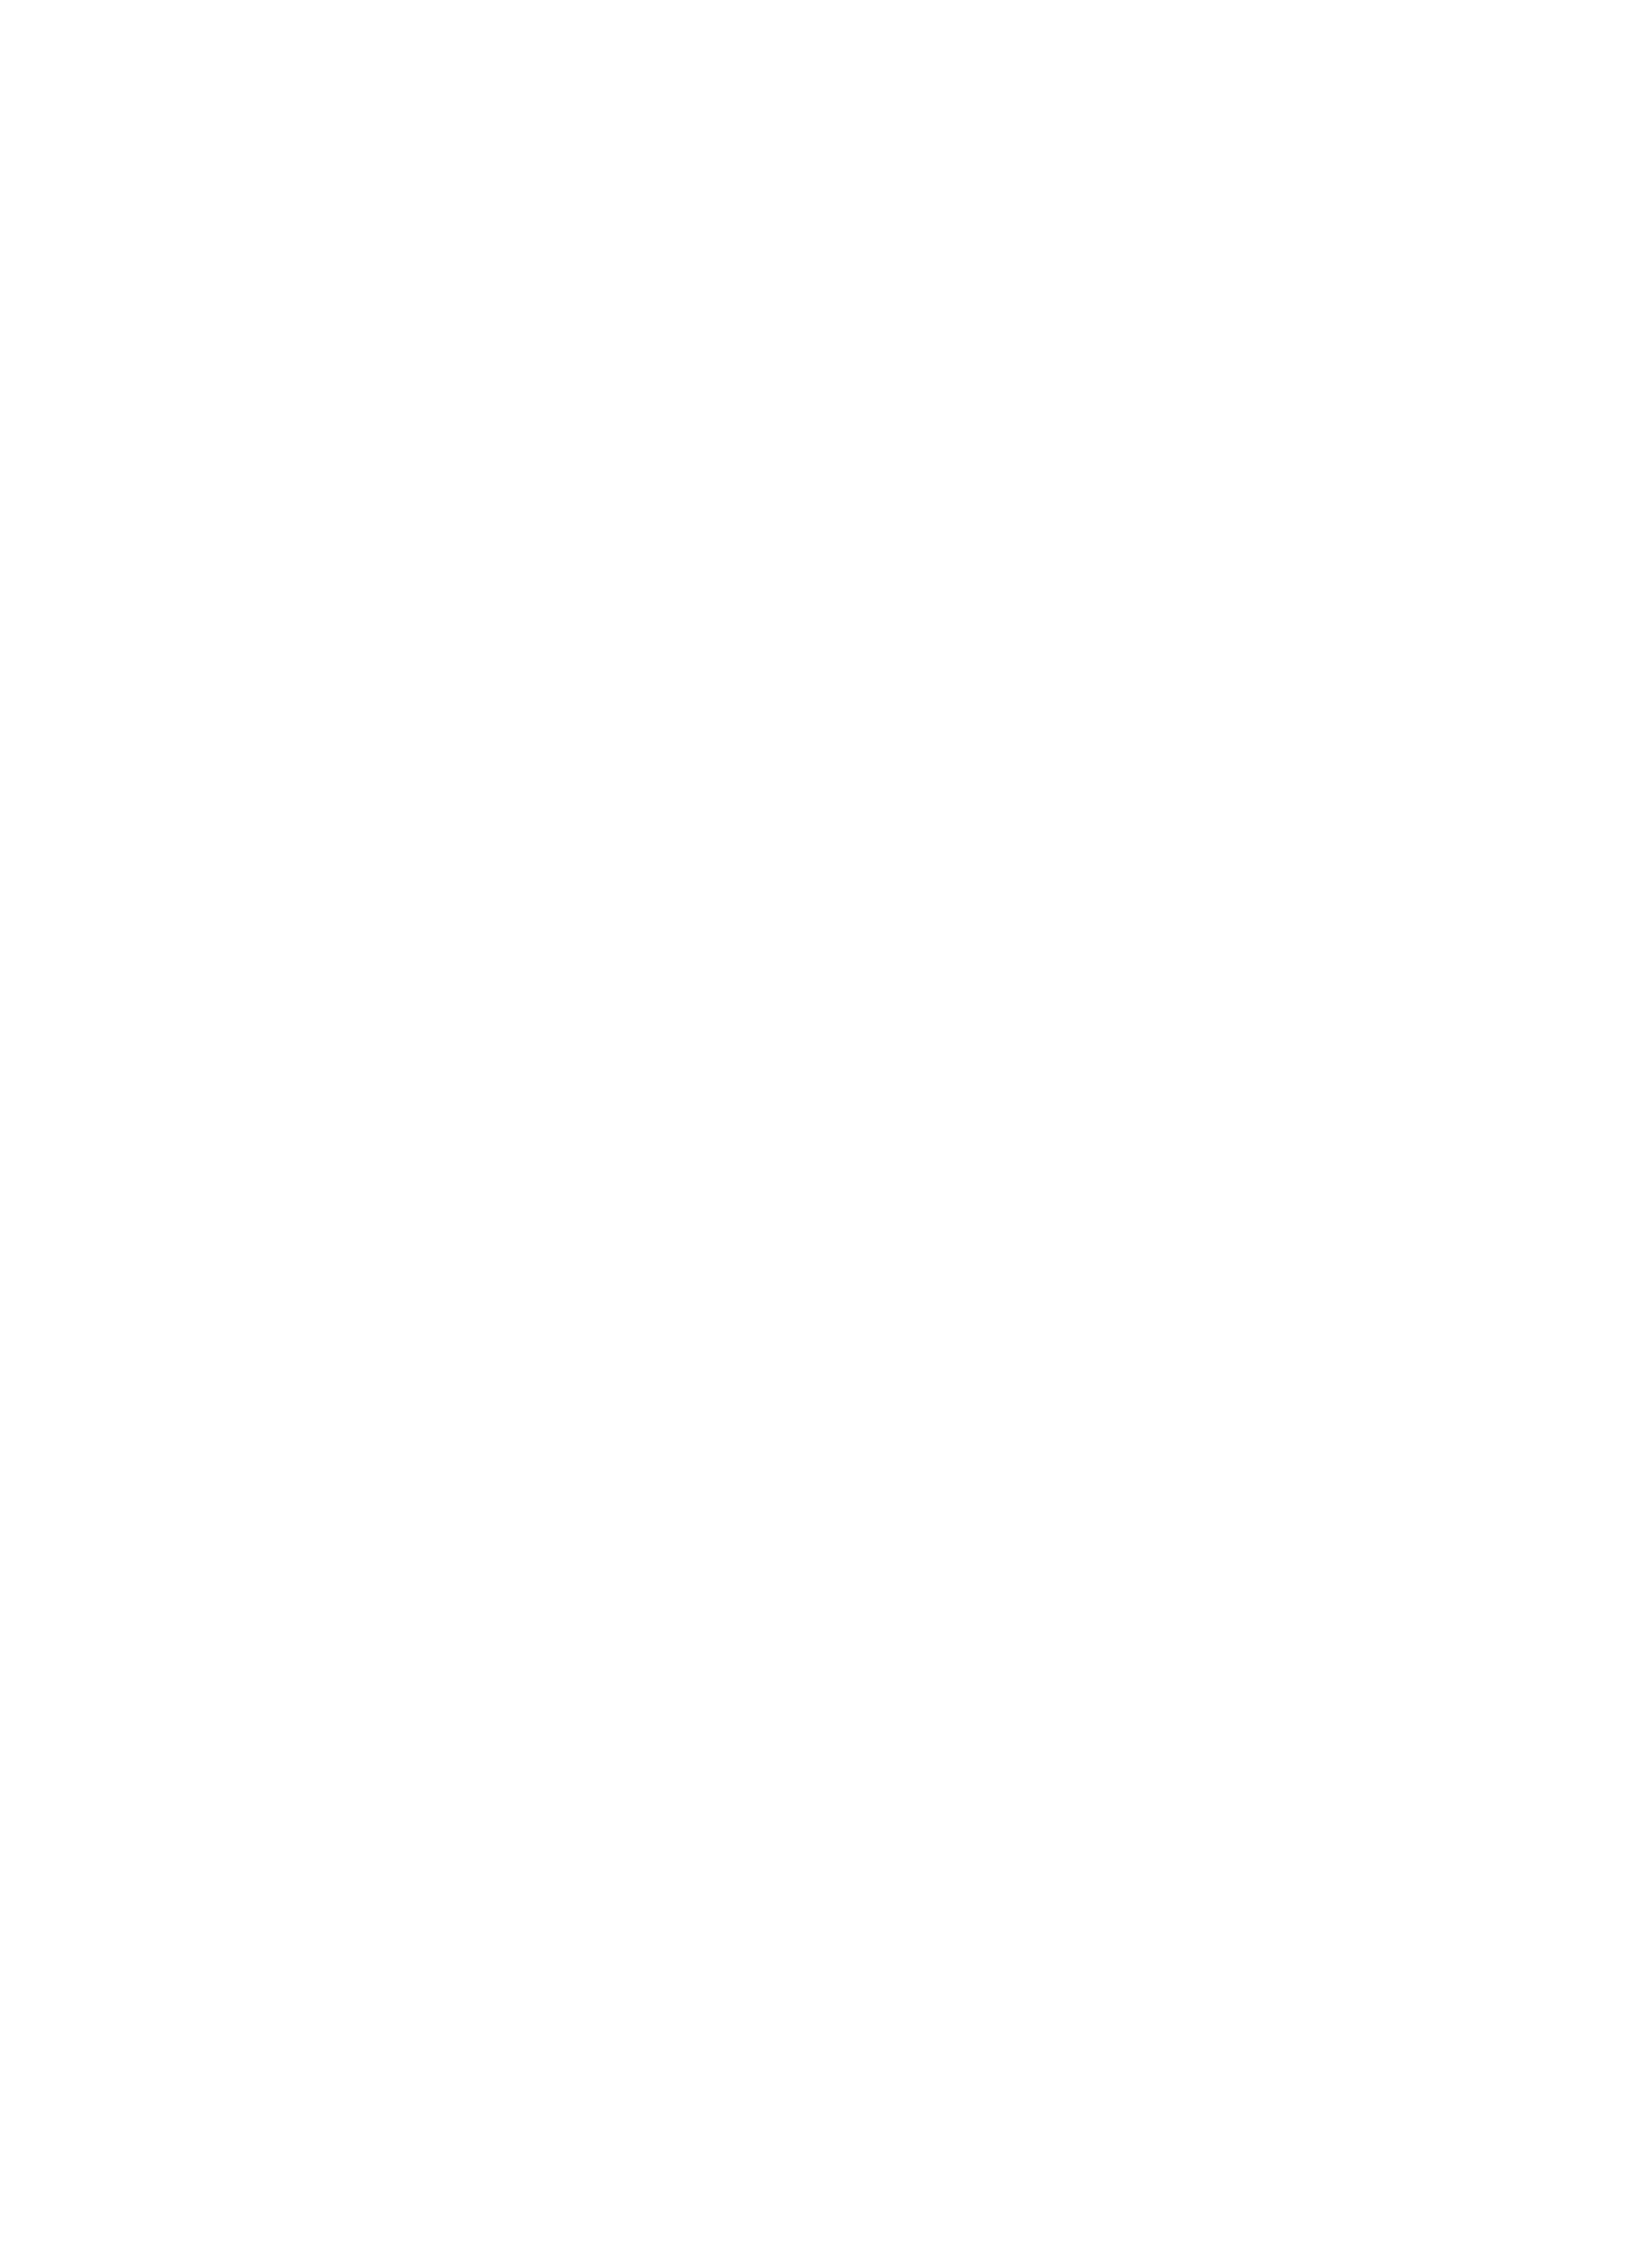 Logotip - ACS_Blanc